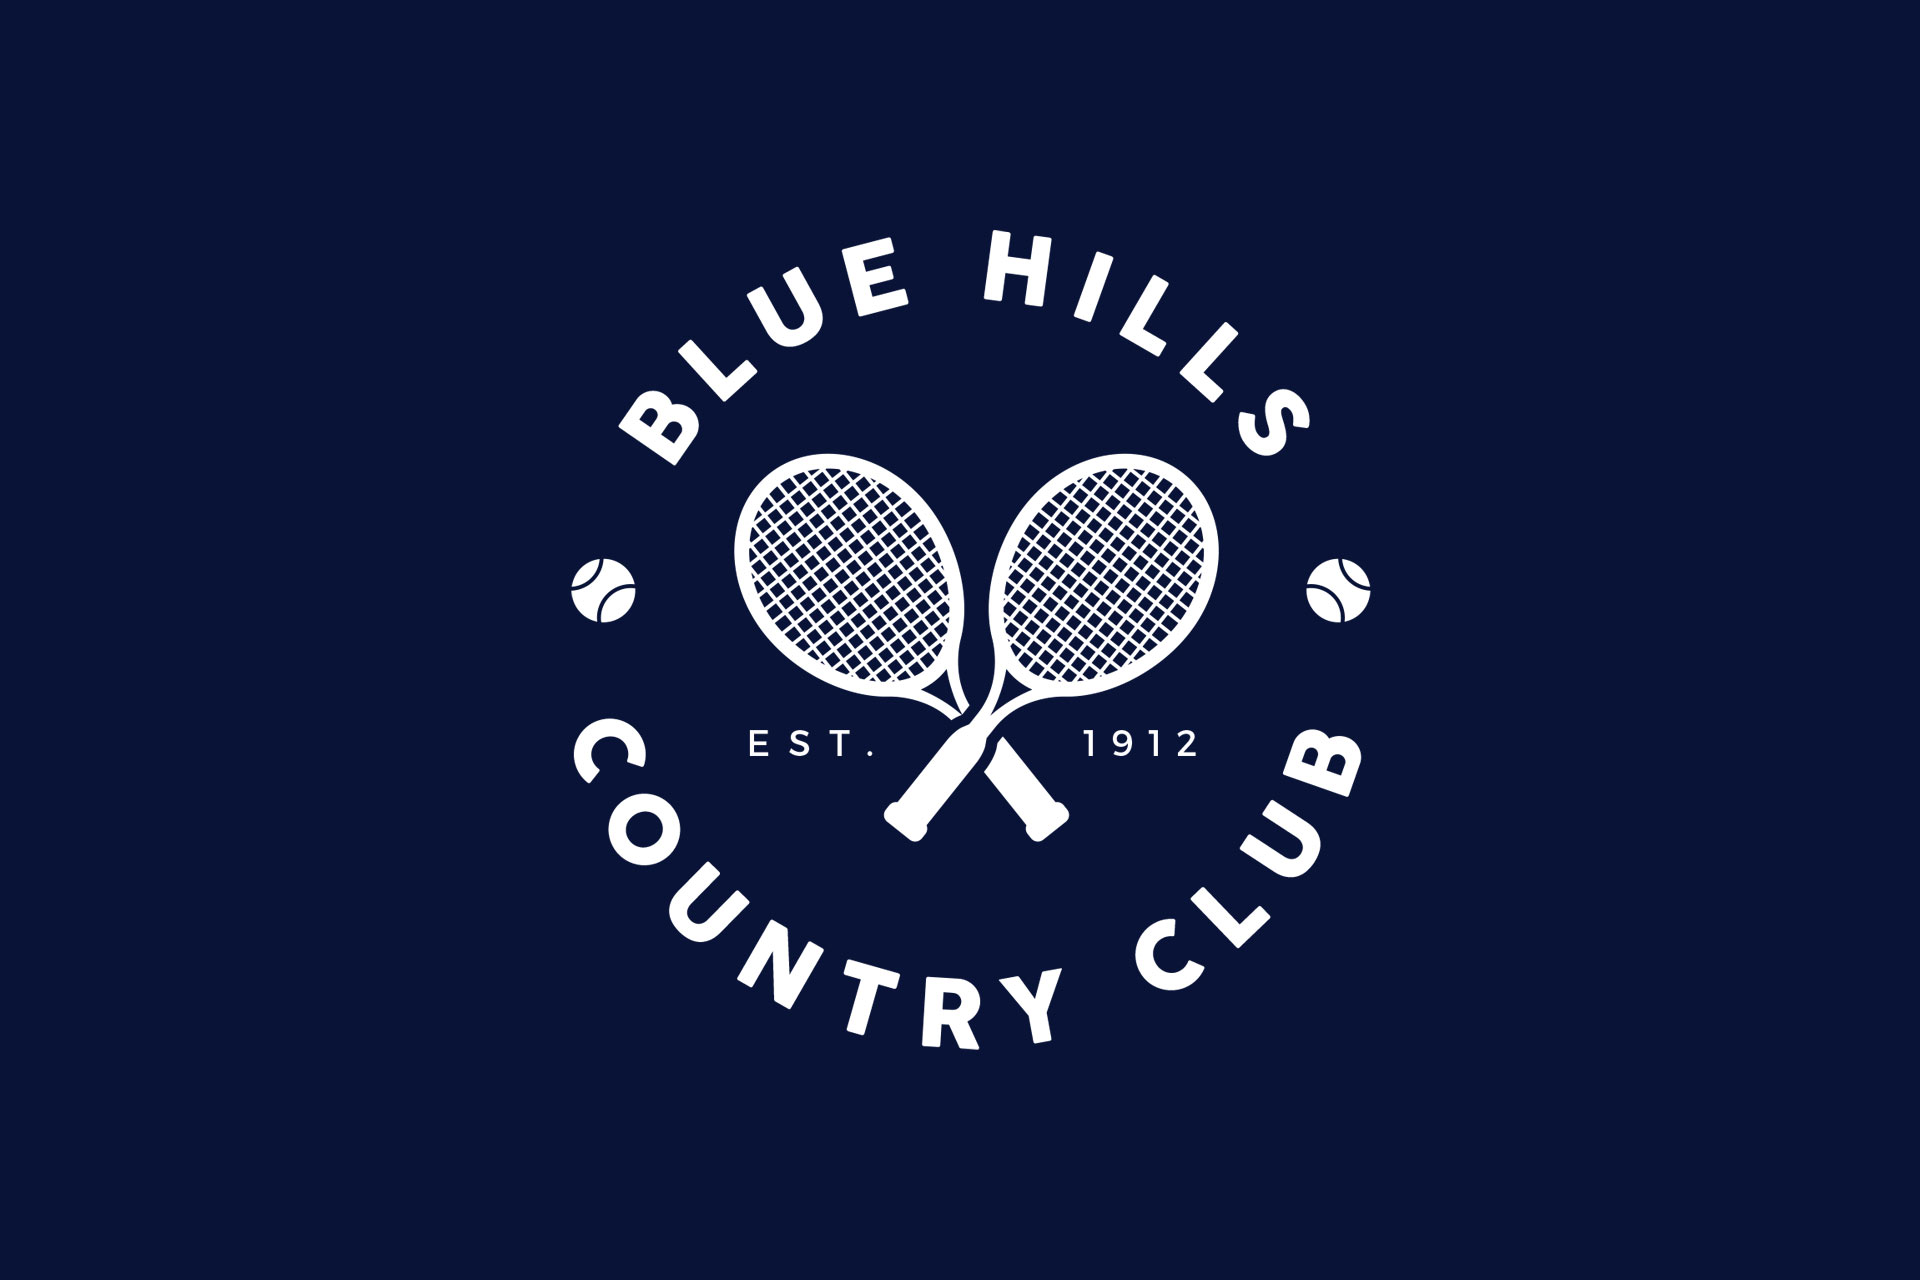 Blue Hills Country Club